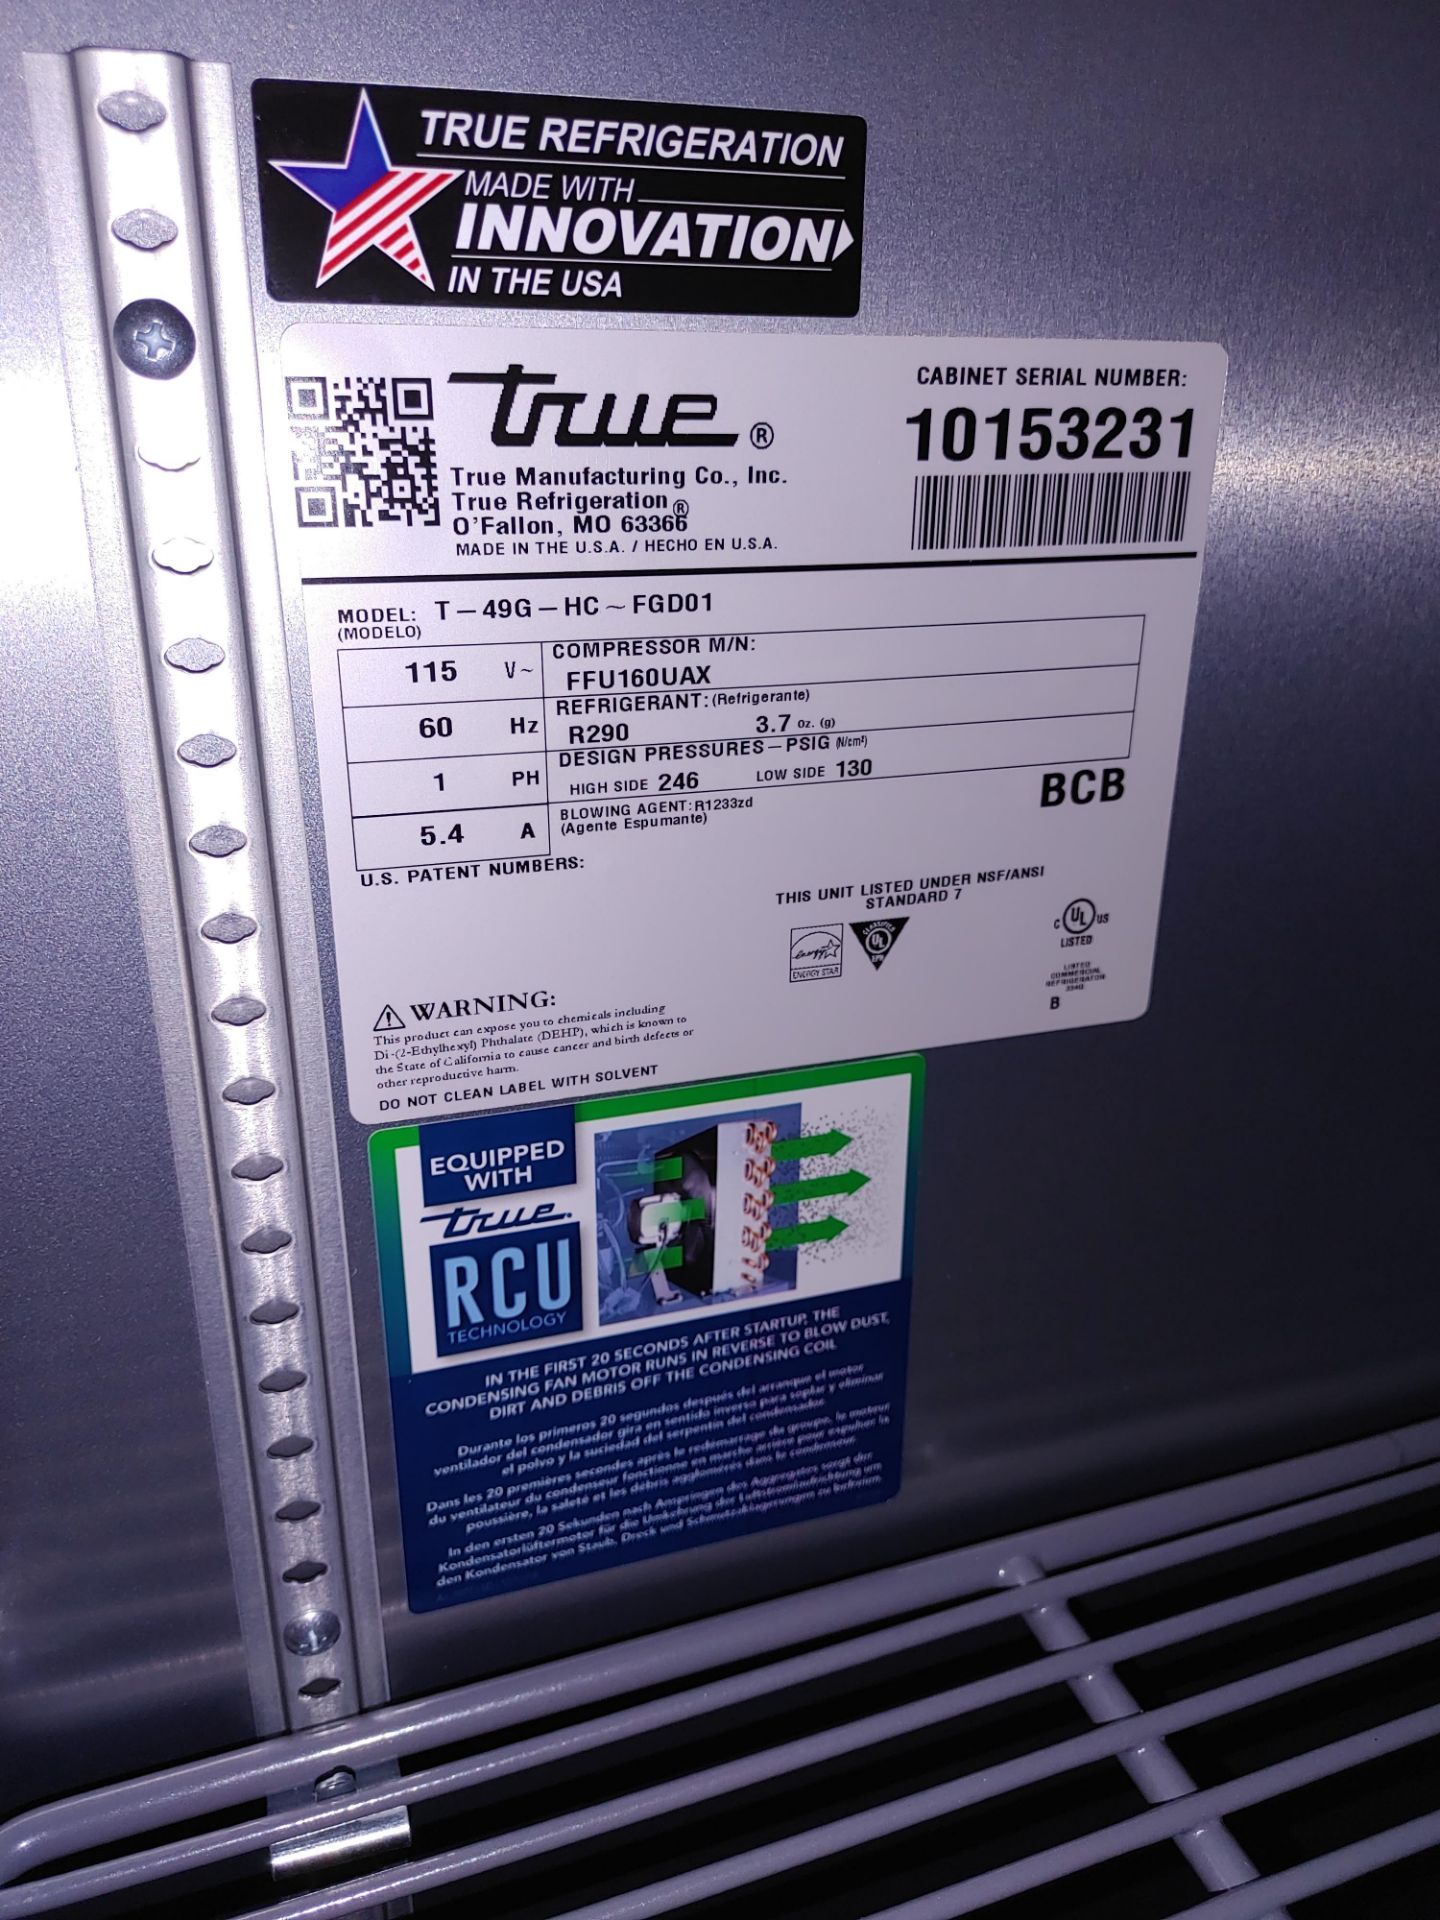 True "T-49G-HC-FGD01" 2 Door Glass Front Refrigerator S/N 10153231 - Image 2 of 2